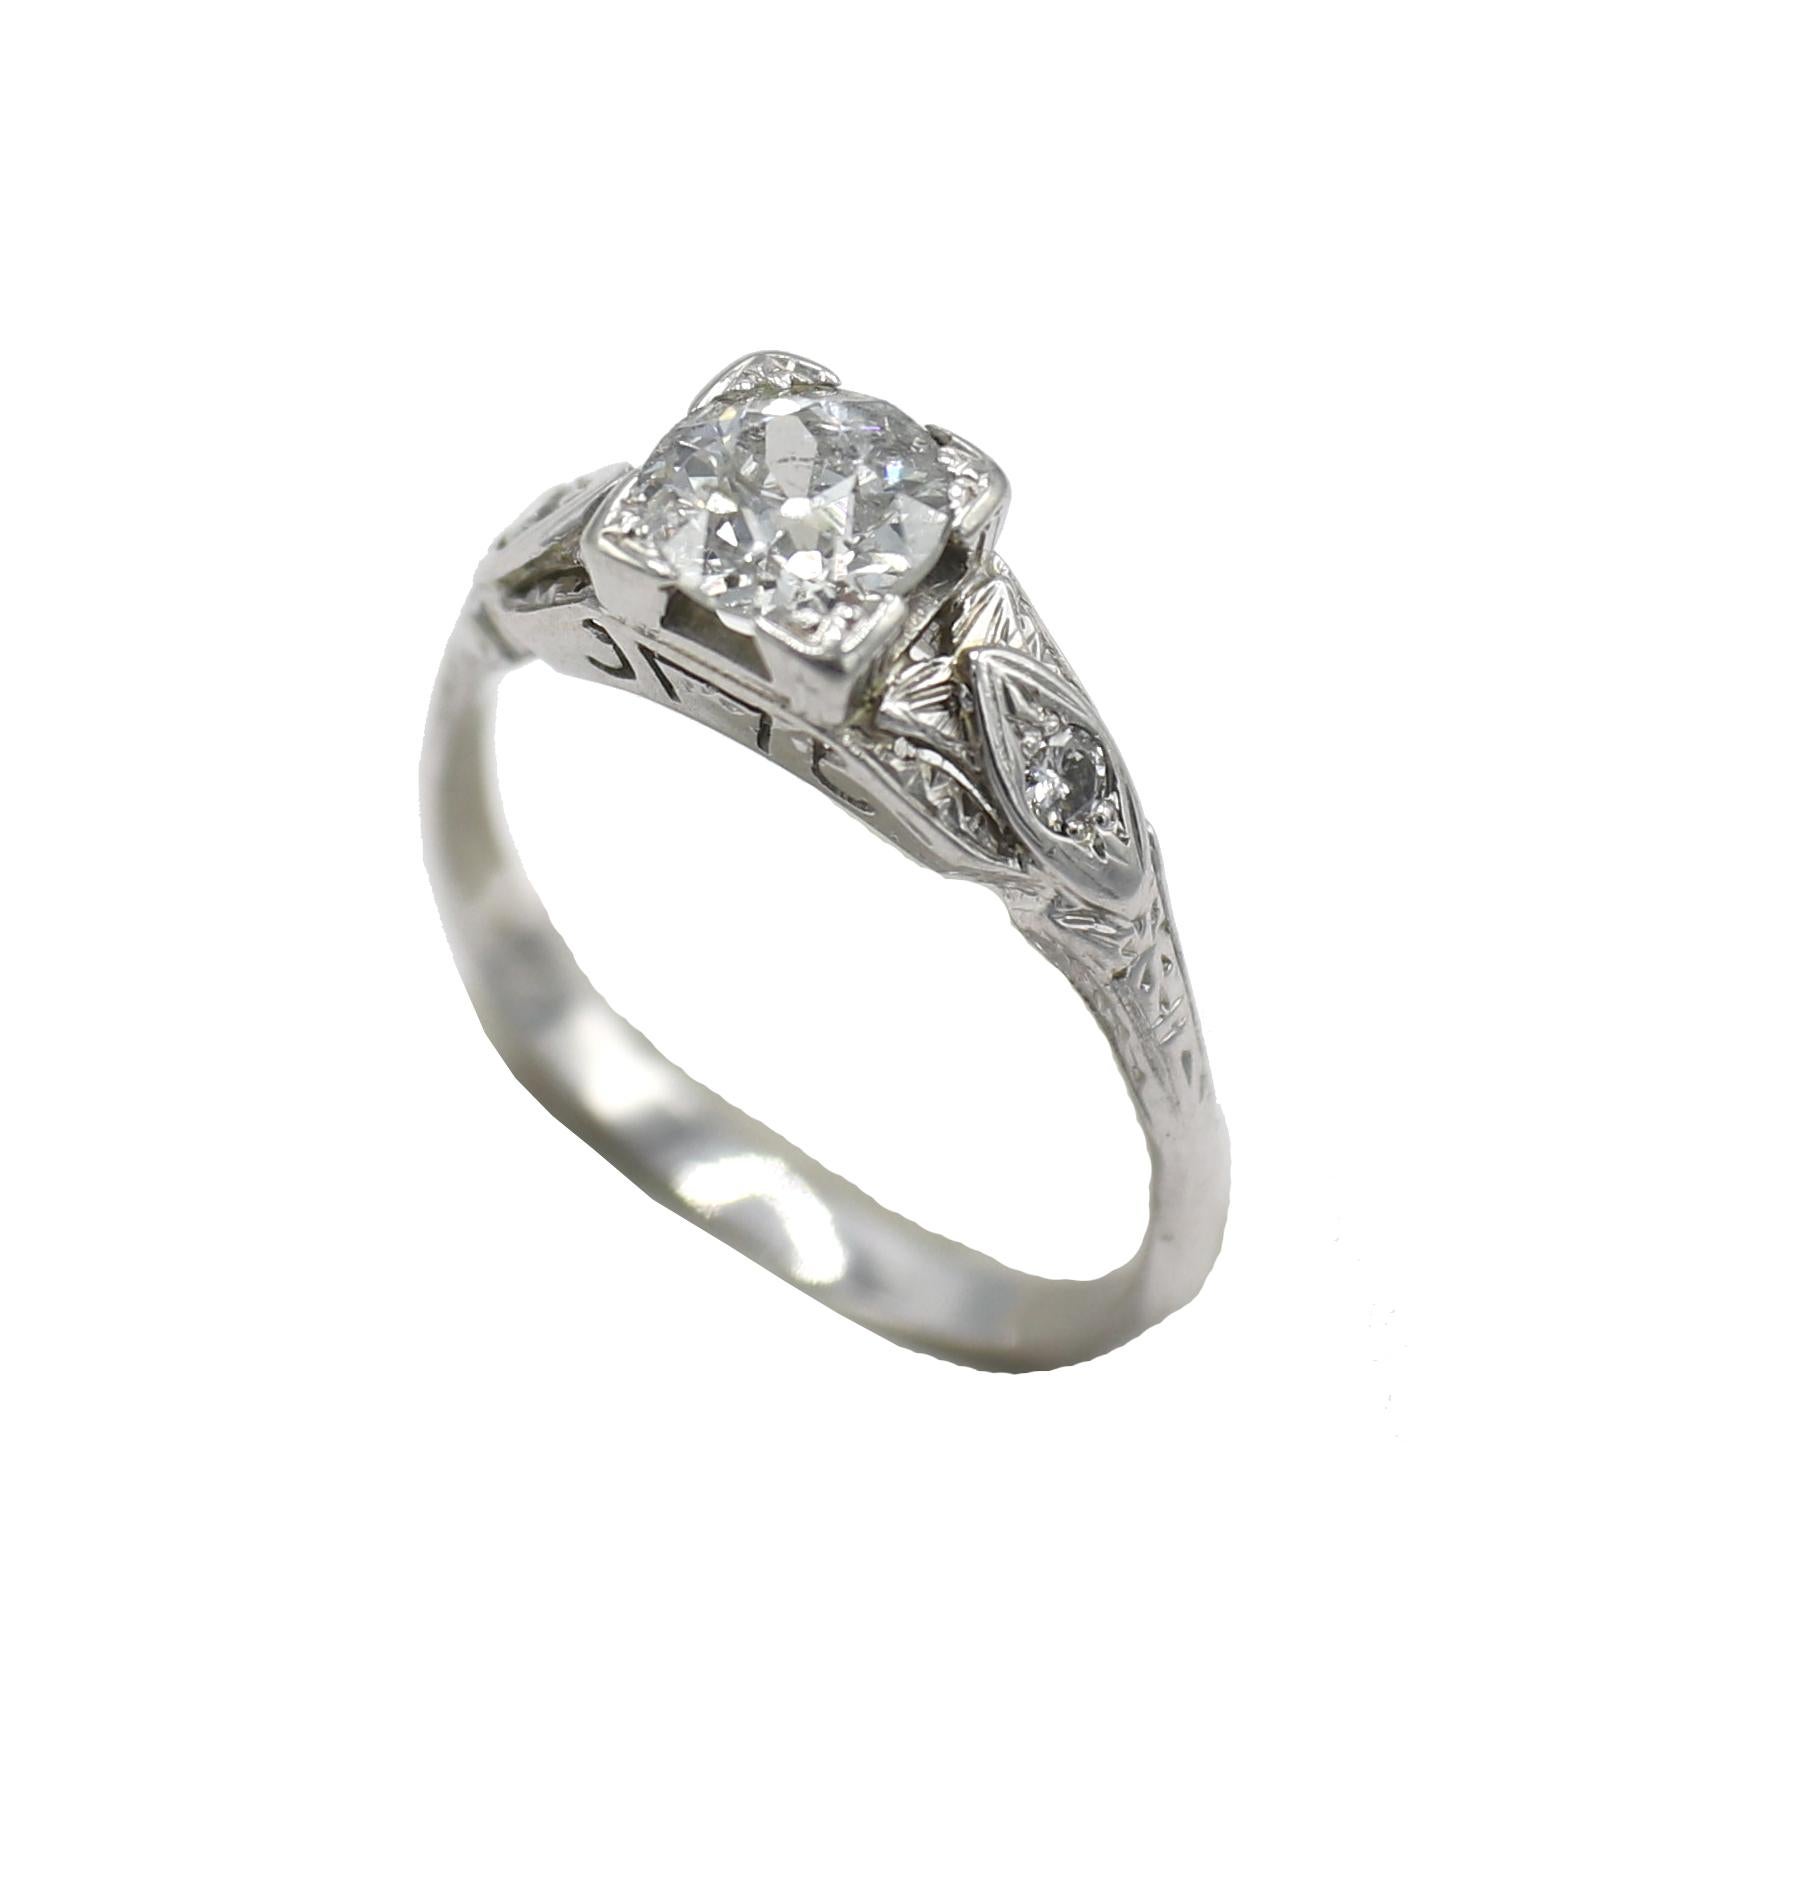 Art Deco 18 Karat White Gold Old European Cut Natural Diamond Engagement Ring 
Metal: 18k white gold
Weight: 3.17 grams
Diamond: Approx. .95 carat J I1 natural diamond
Accent diamonds: Approx. .10 CTW J SI natural diamonds
Size: 8.5 (US)
Height: 6mm
